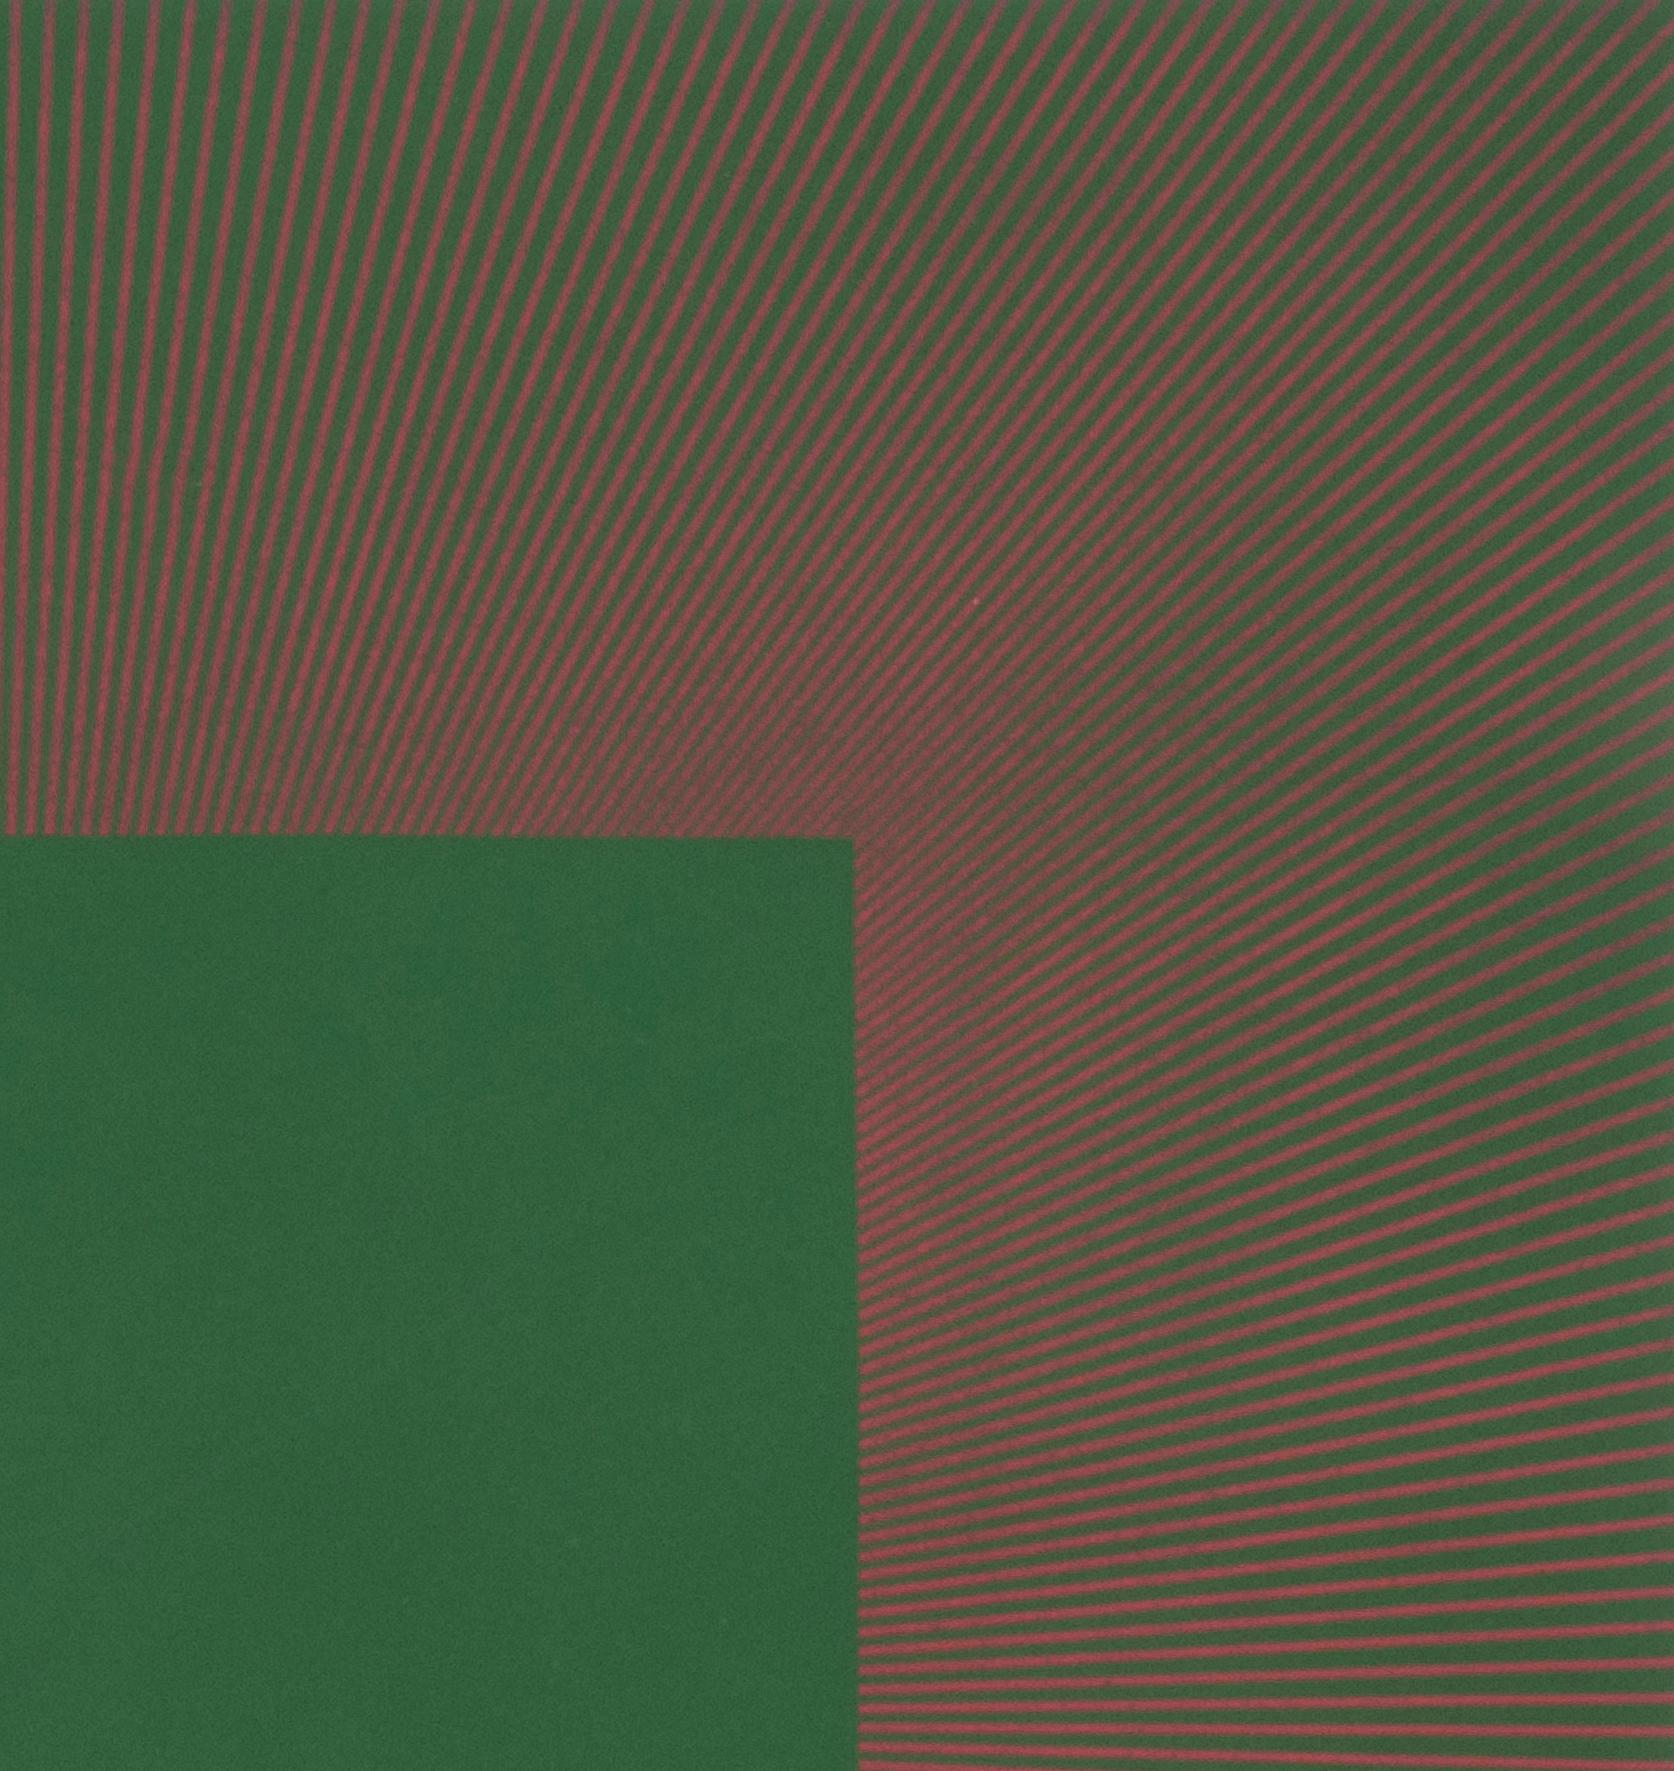 Red to Green Portal - Op Art Print by Richard Anuszkiewicz